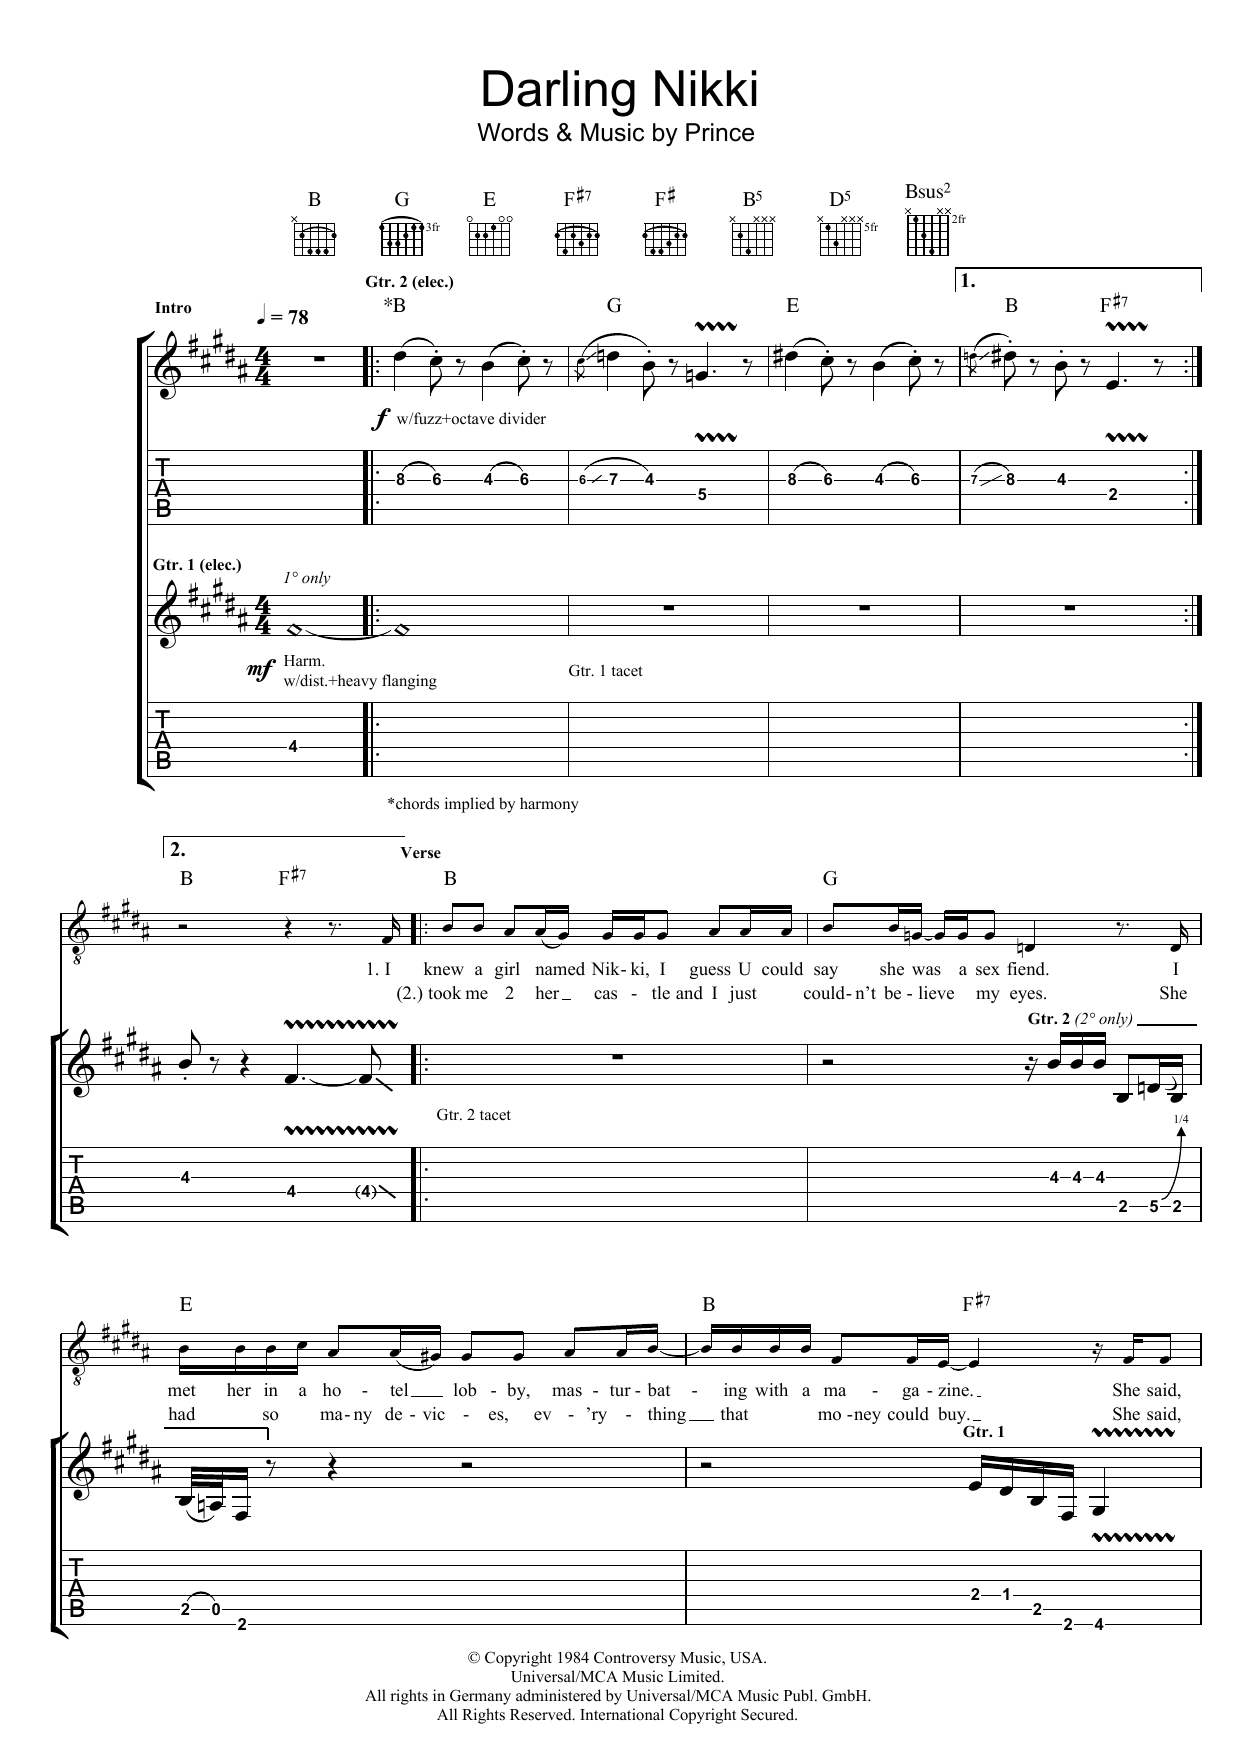 Prince Darling Nikki Sheet Music Notes & Chords for Guitar Tab - Download or Print PDF